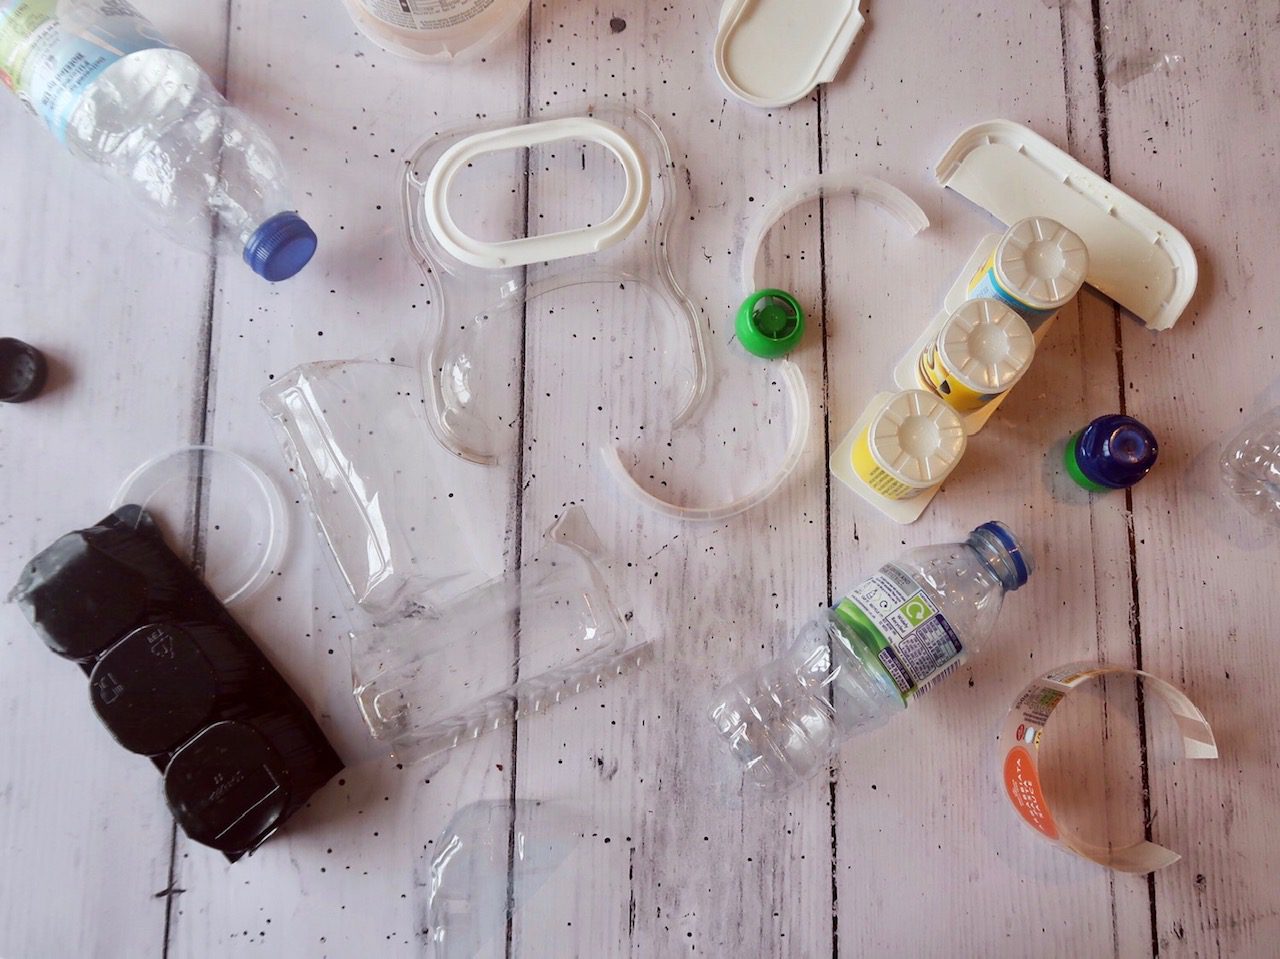 Single-Use Plastic – Make 1Change